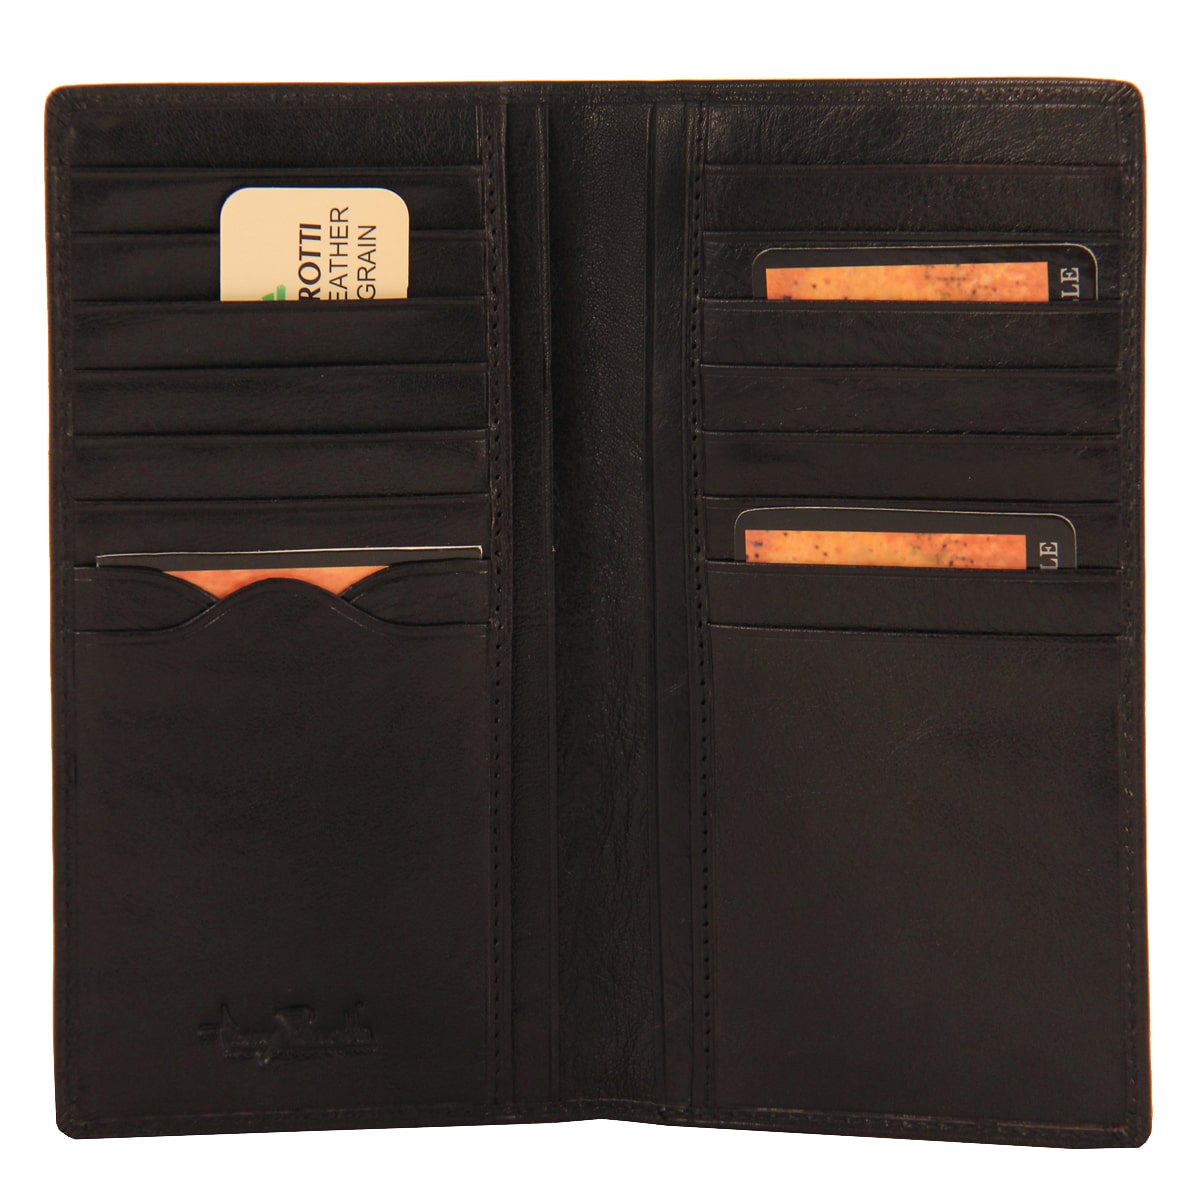 Wallet leather black Tony Perotti Italico 1437 nero